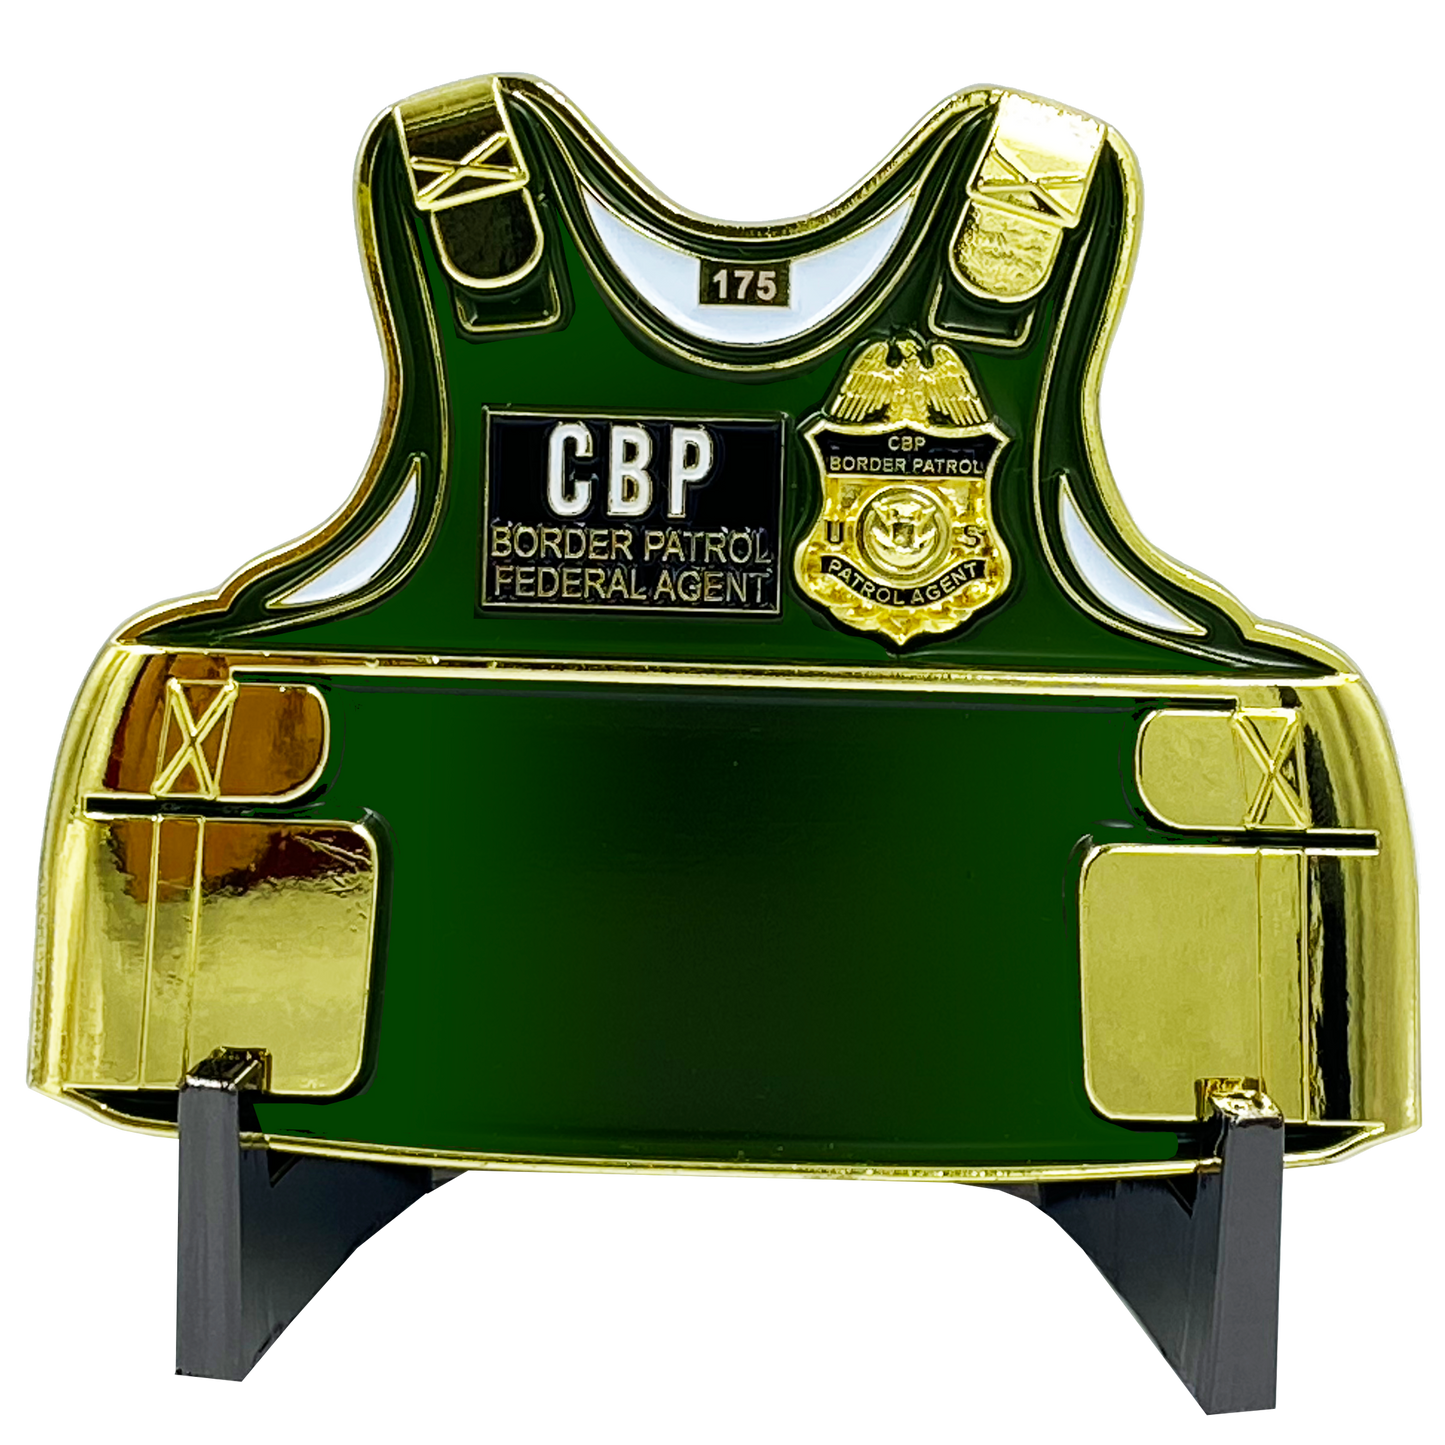 EL6-010 Border Patrol Agent BPA uniform 3D Challenge Coin CBP Honor First BP Thin Green Line